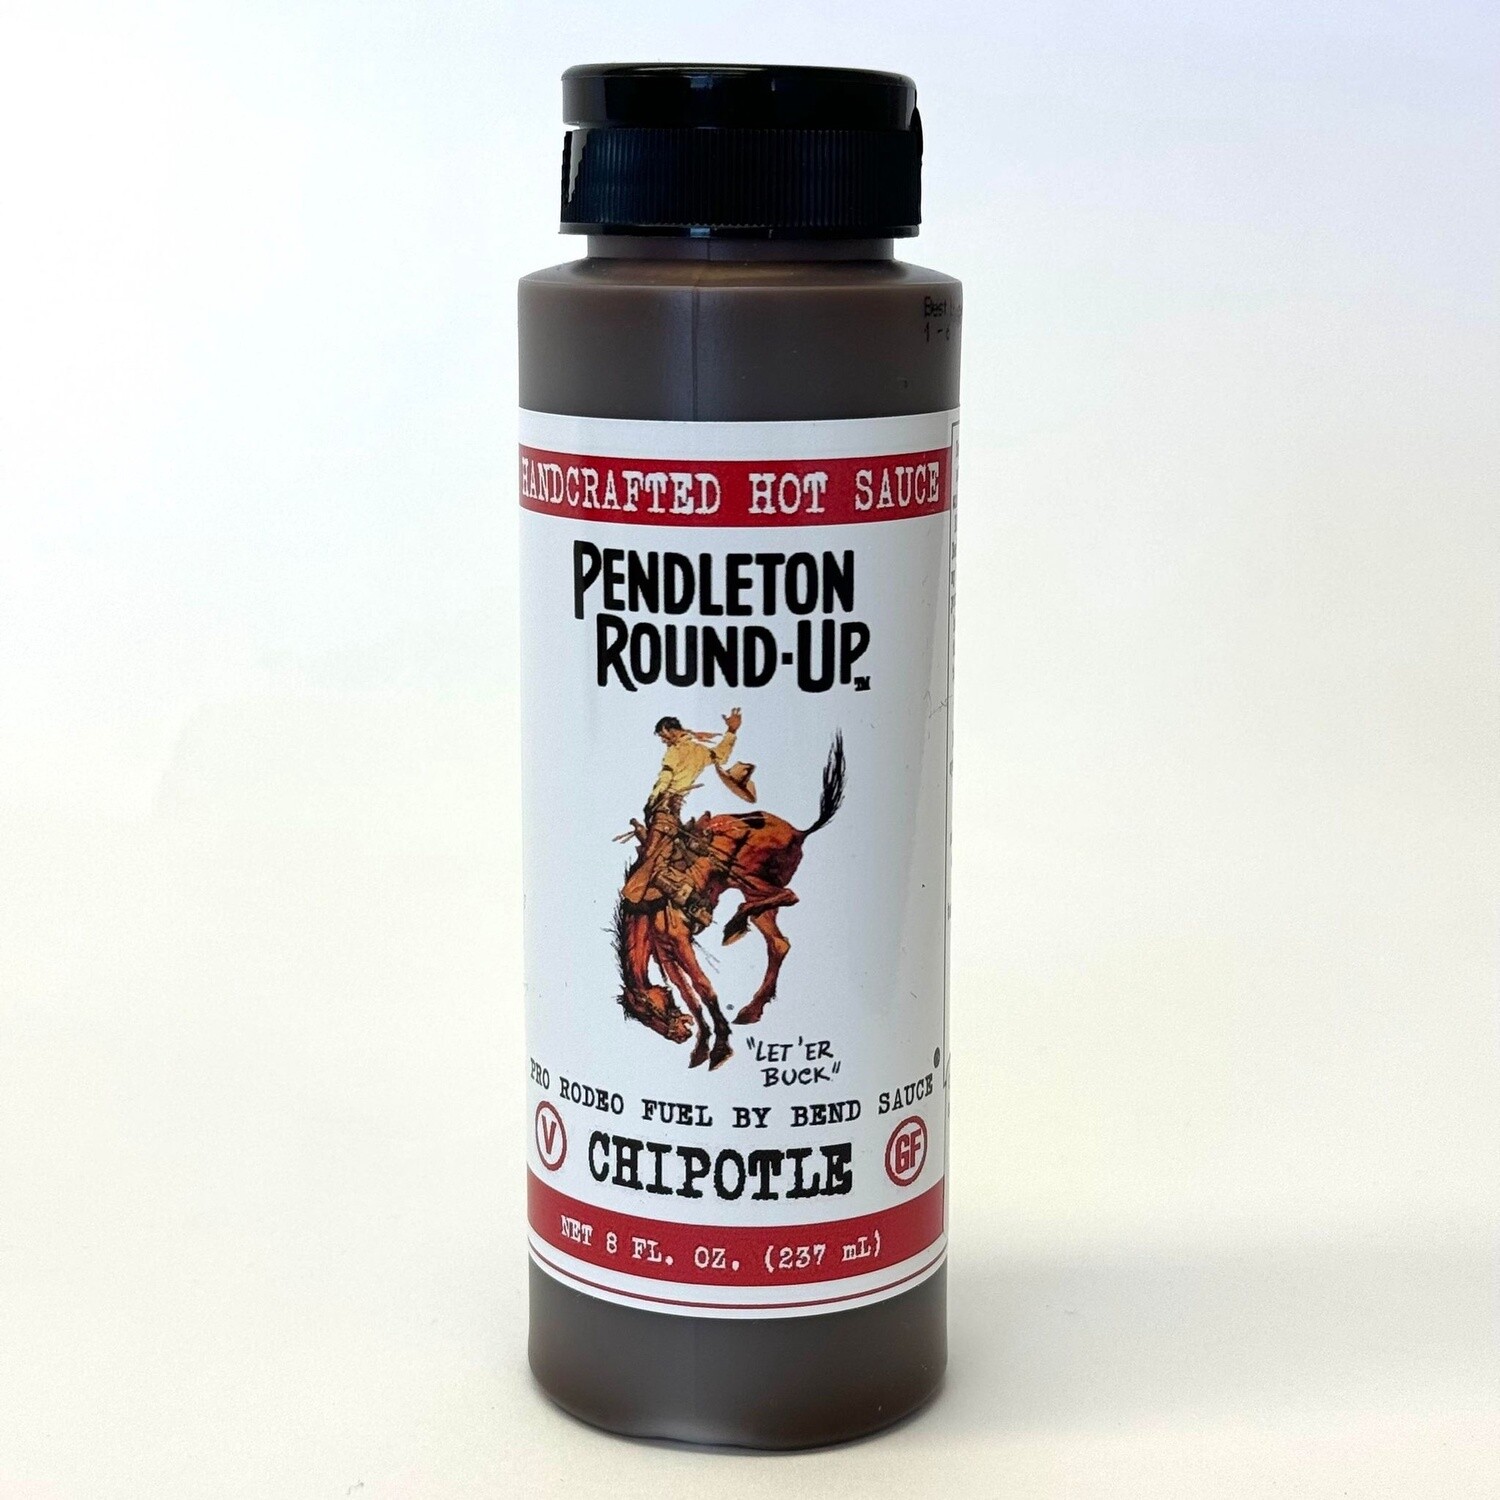 Pendleton Round-Up Chipotle Hot Sauce, size: 8oz